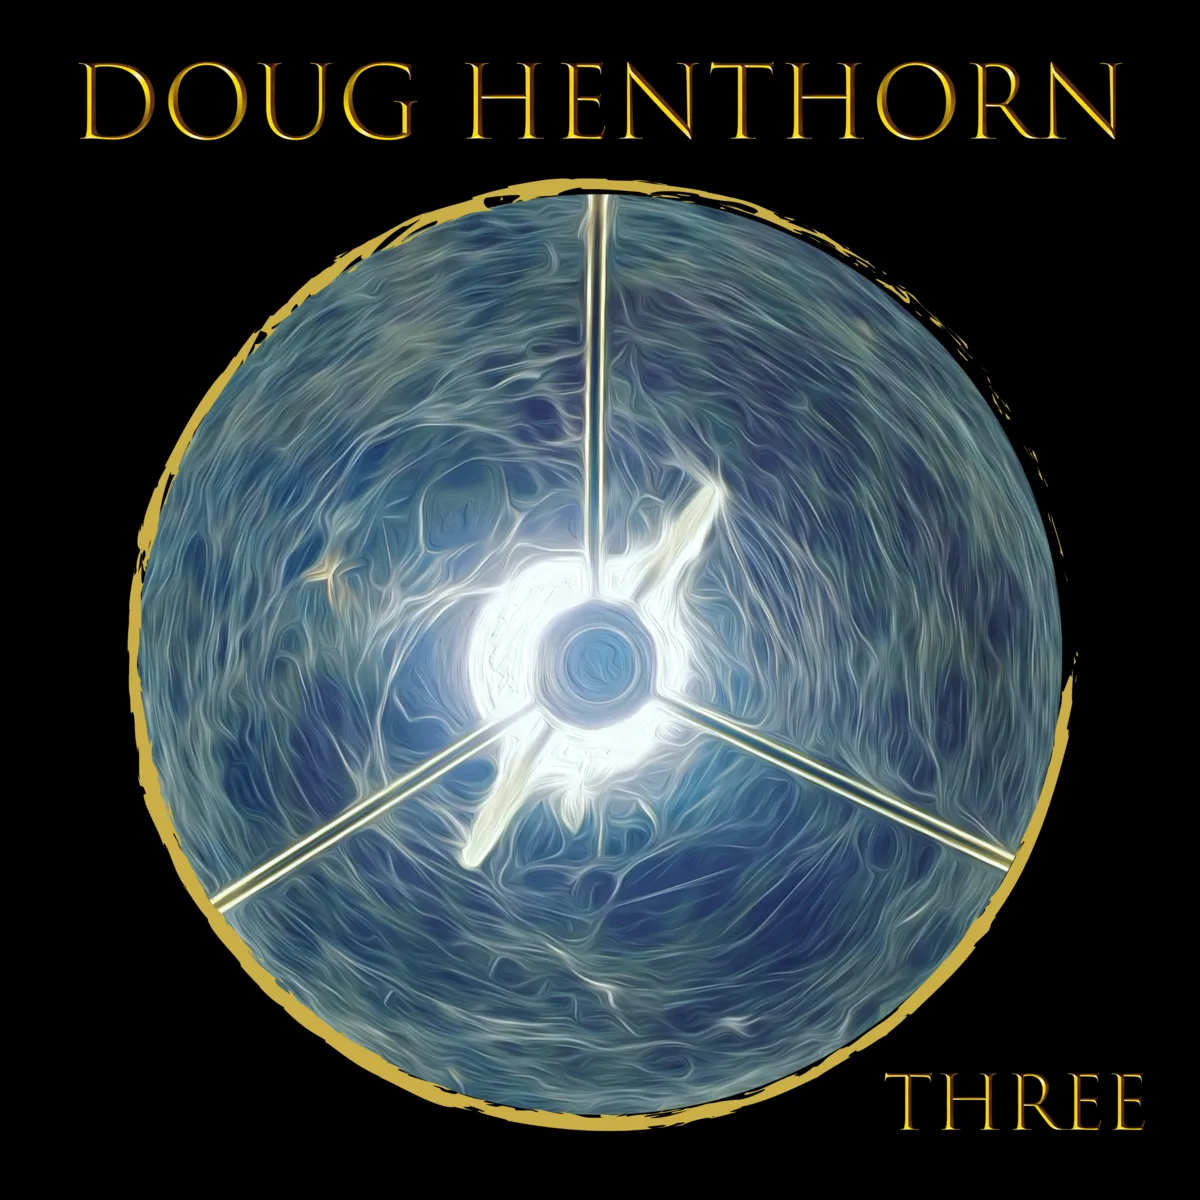 DH "Three" Hard Copy CD